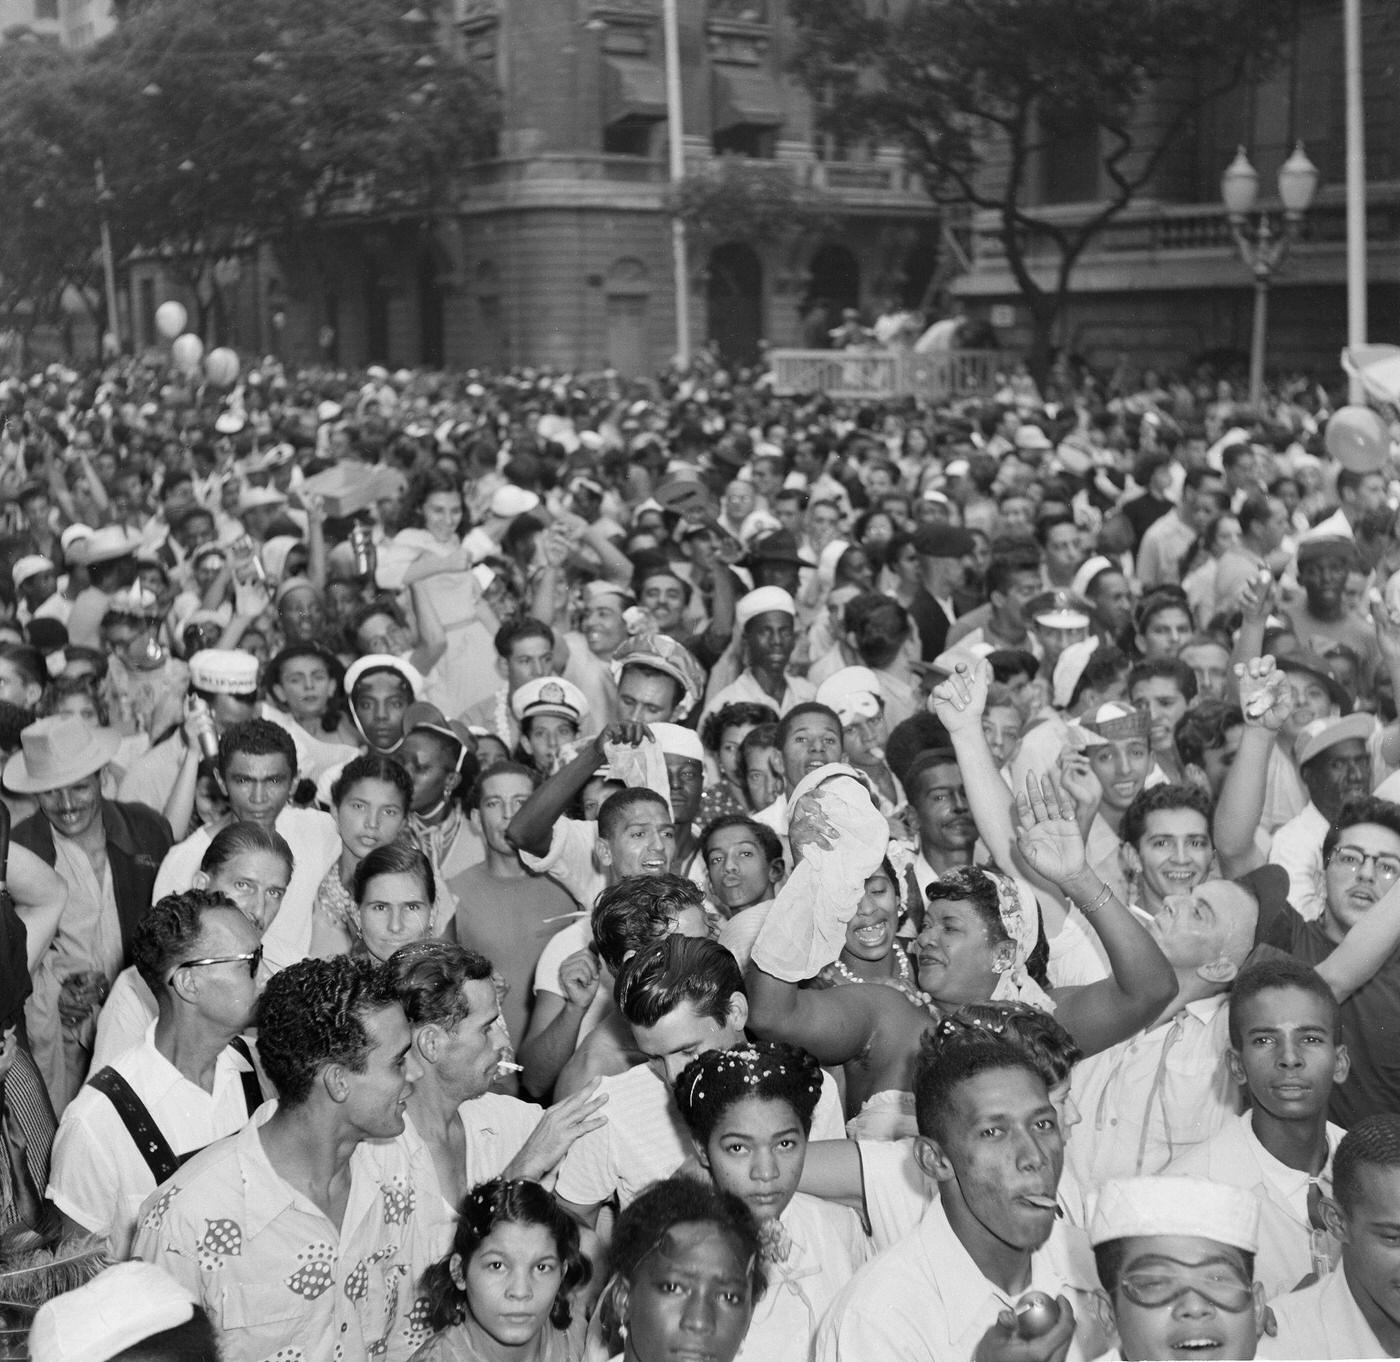 Gathering on Street, Carnival in Rio 1953